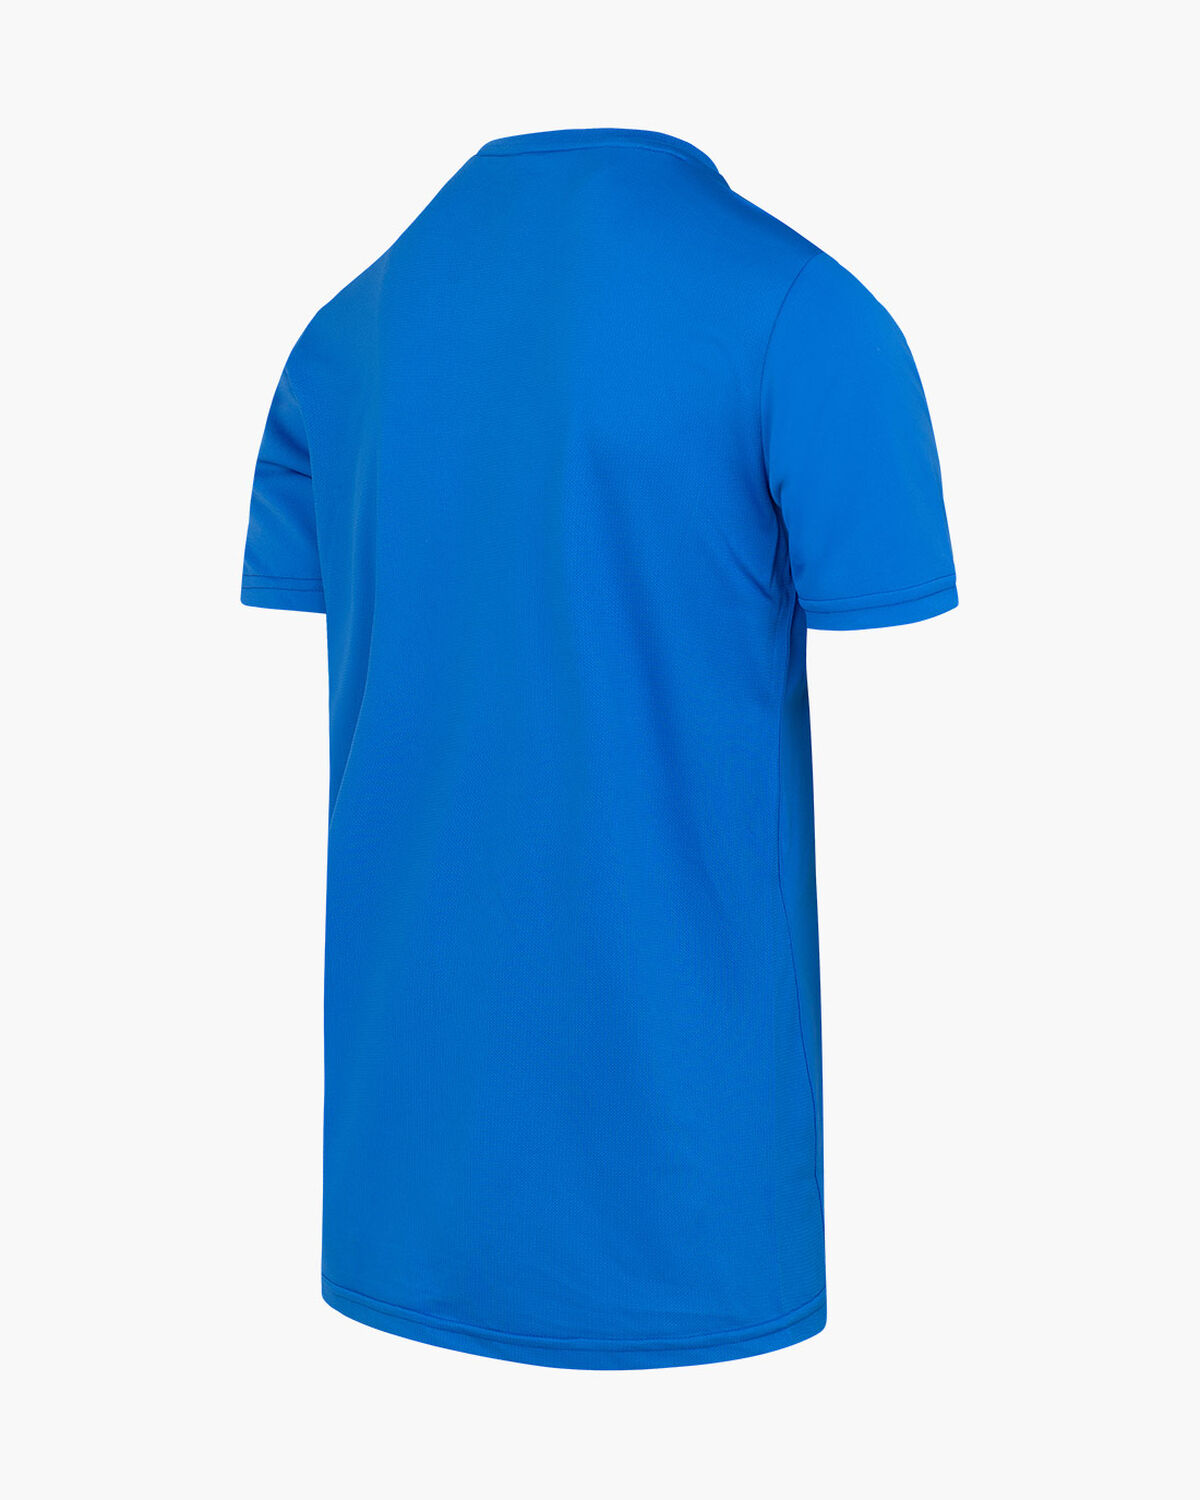 Cruyff Training Shirt Junior, Blue, hi-res